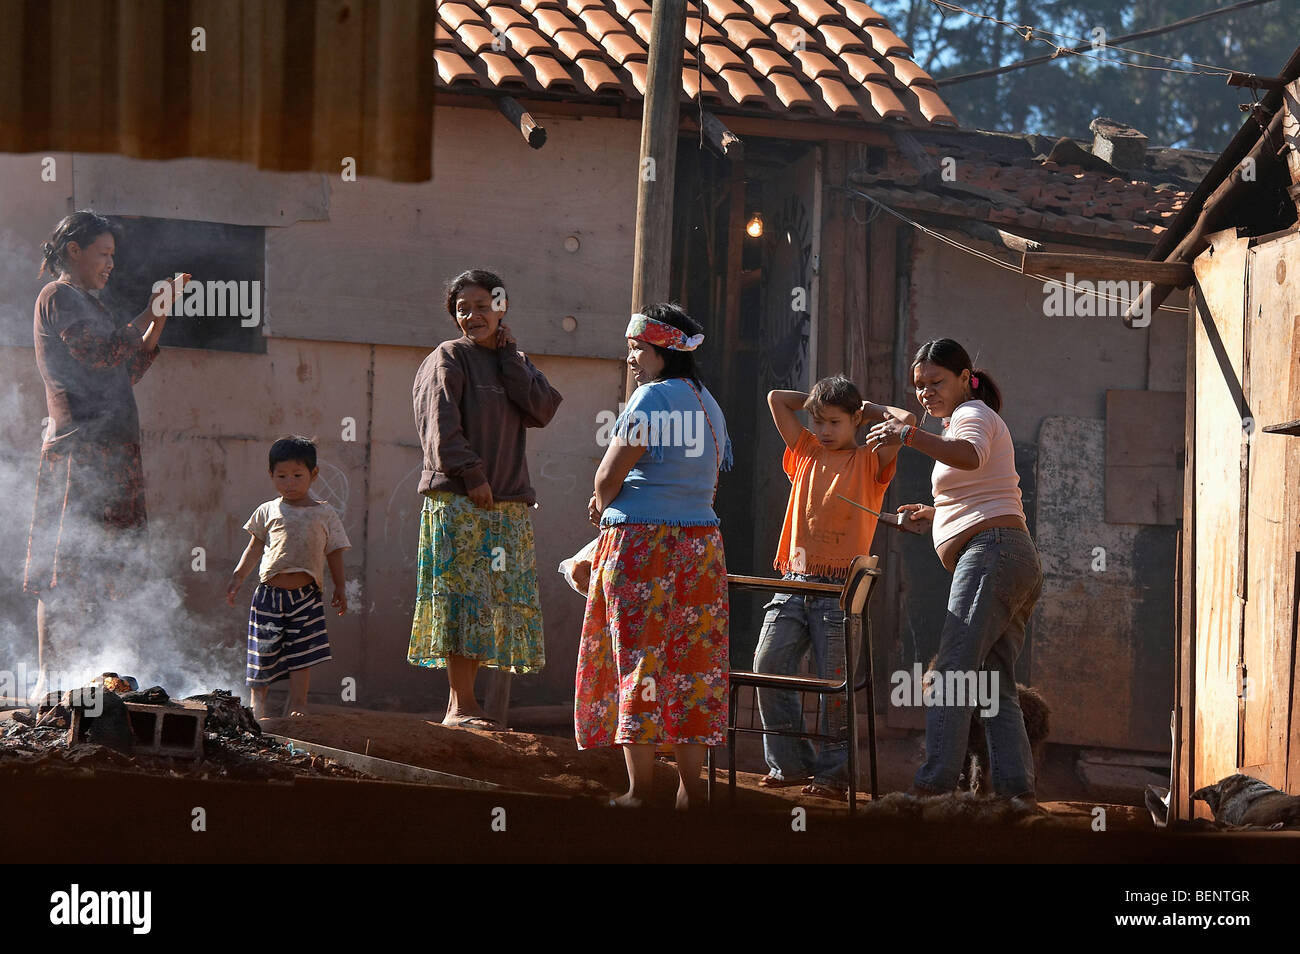 Brasilien Aldeia Tekoa Pyau, einer Guarani Mbya indigenen Slum-Siedlung am Rande von Sao Paulo. Stockfoto